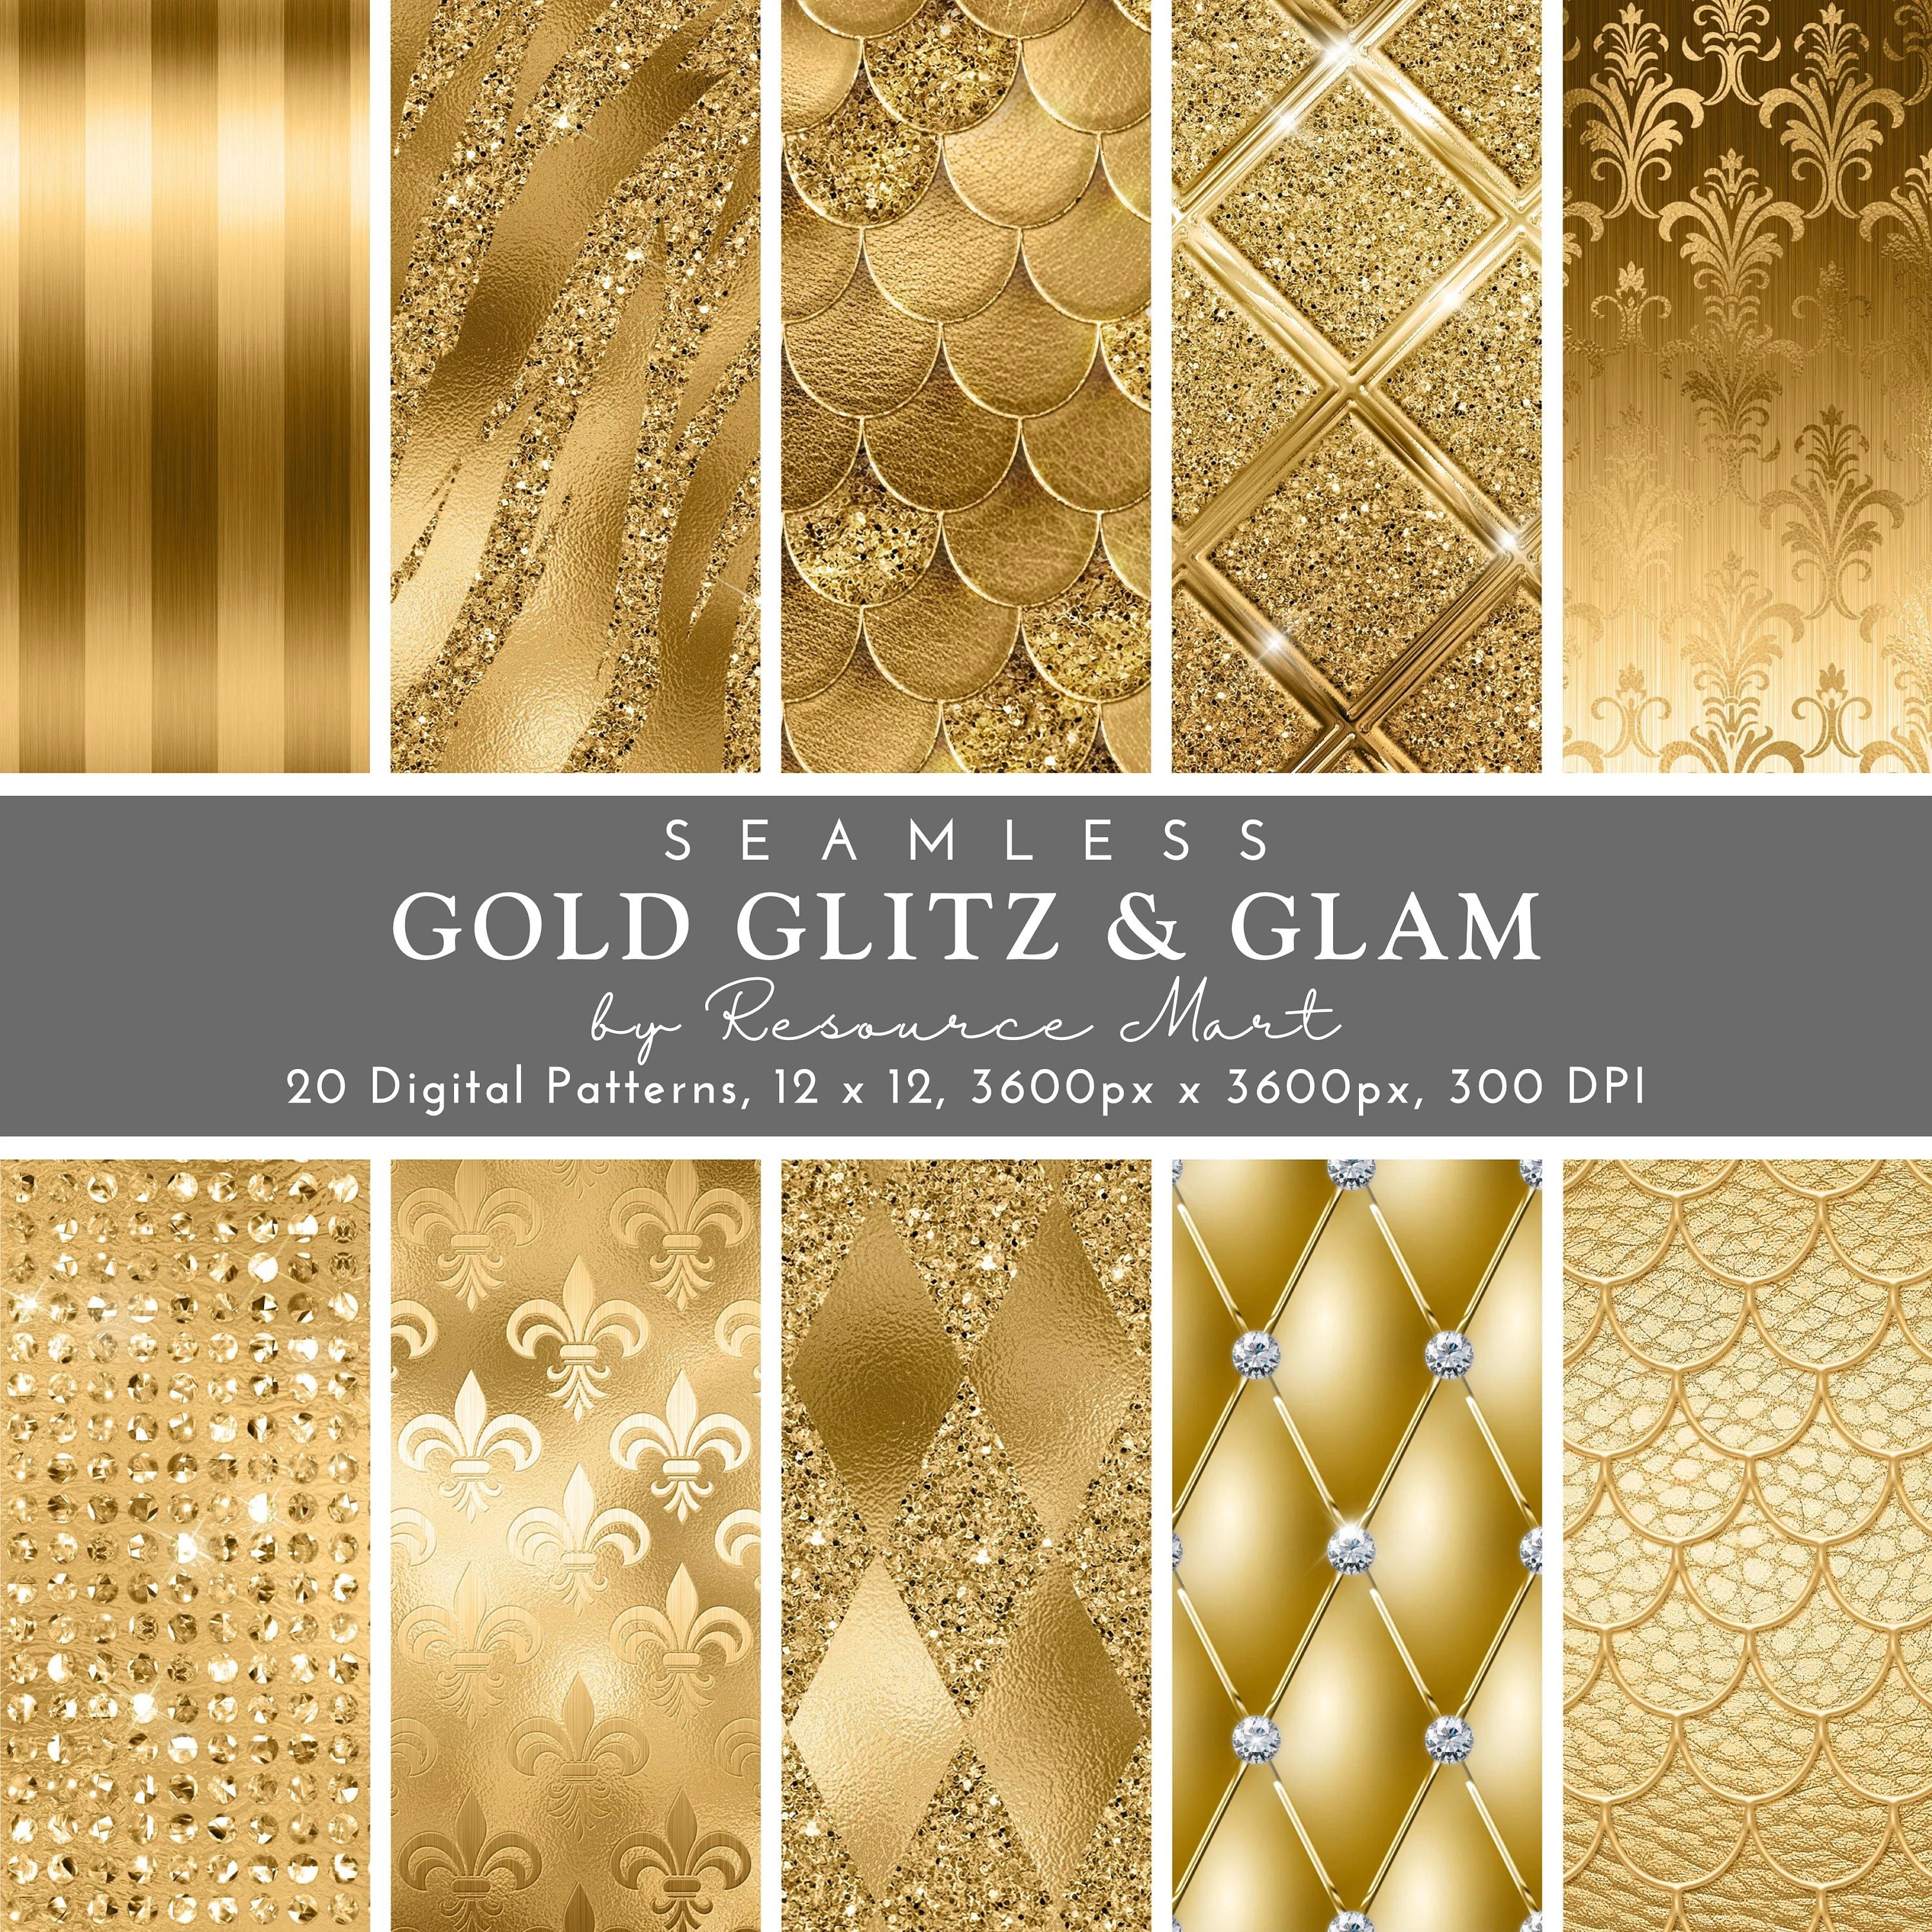 4-oz. Glitzy Glitter Assorted Colors Fabric Paint - Set of 8 (1 Set(s))